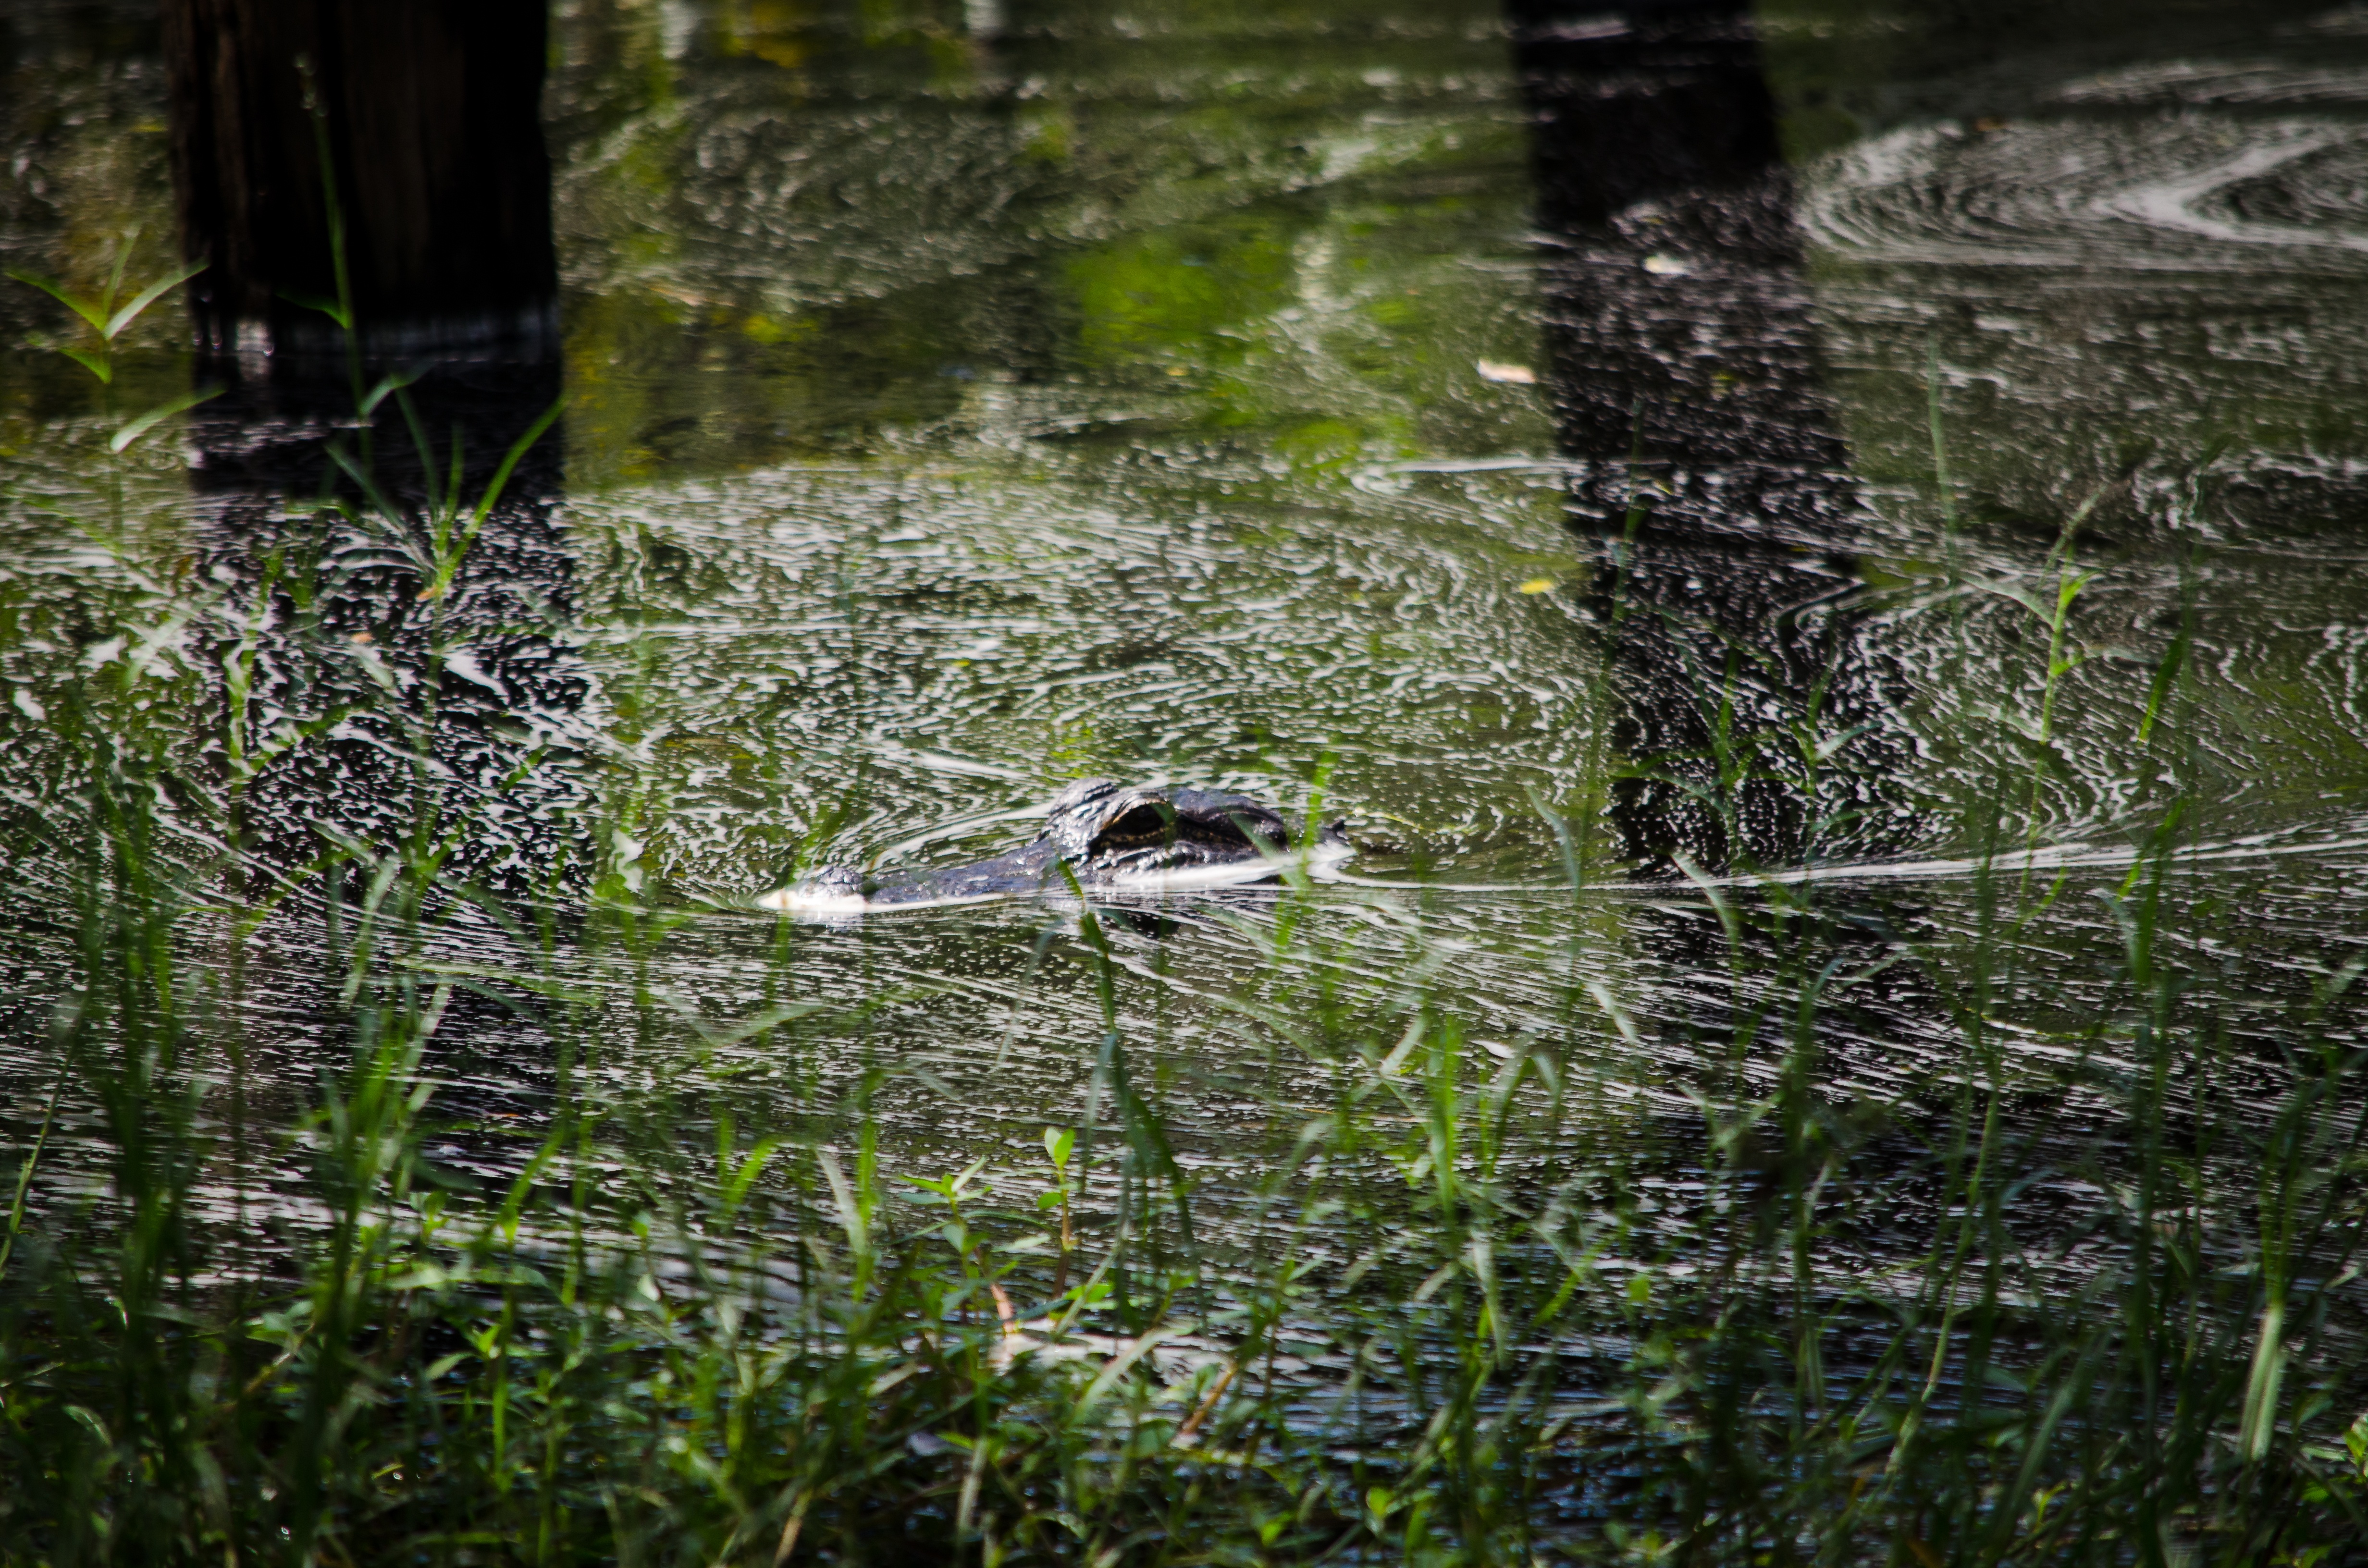 gator swimming in the water